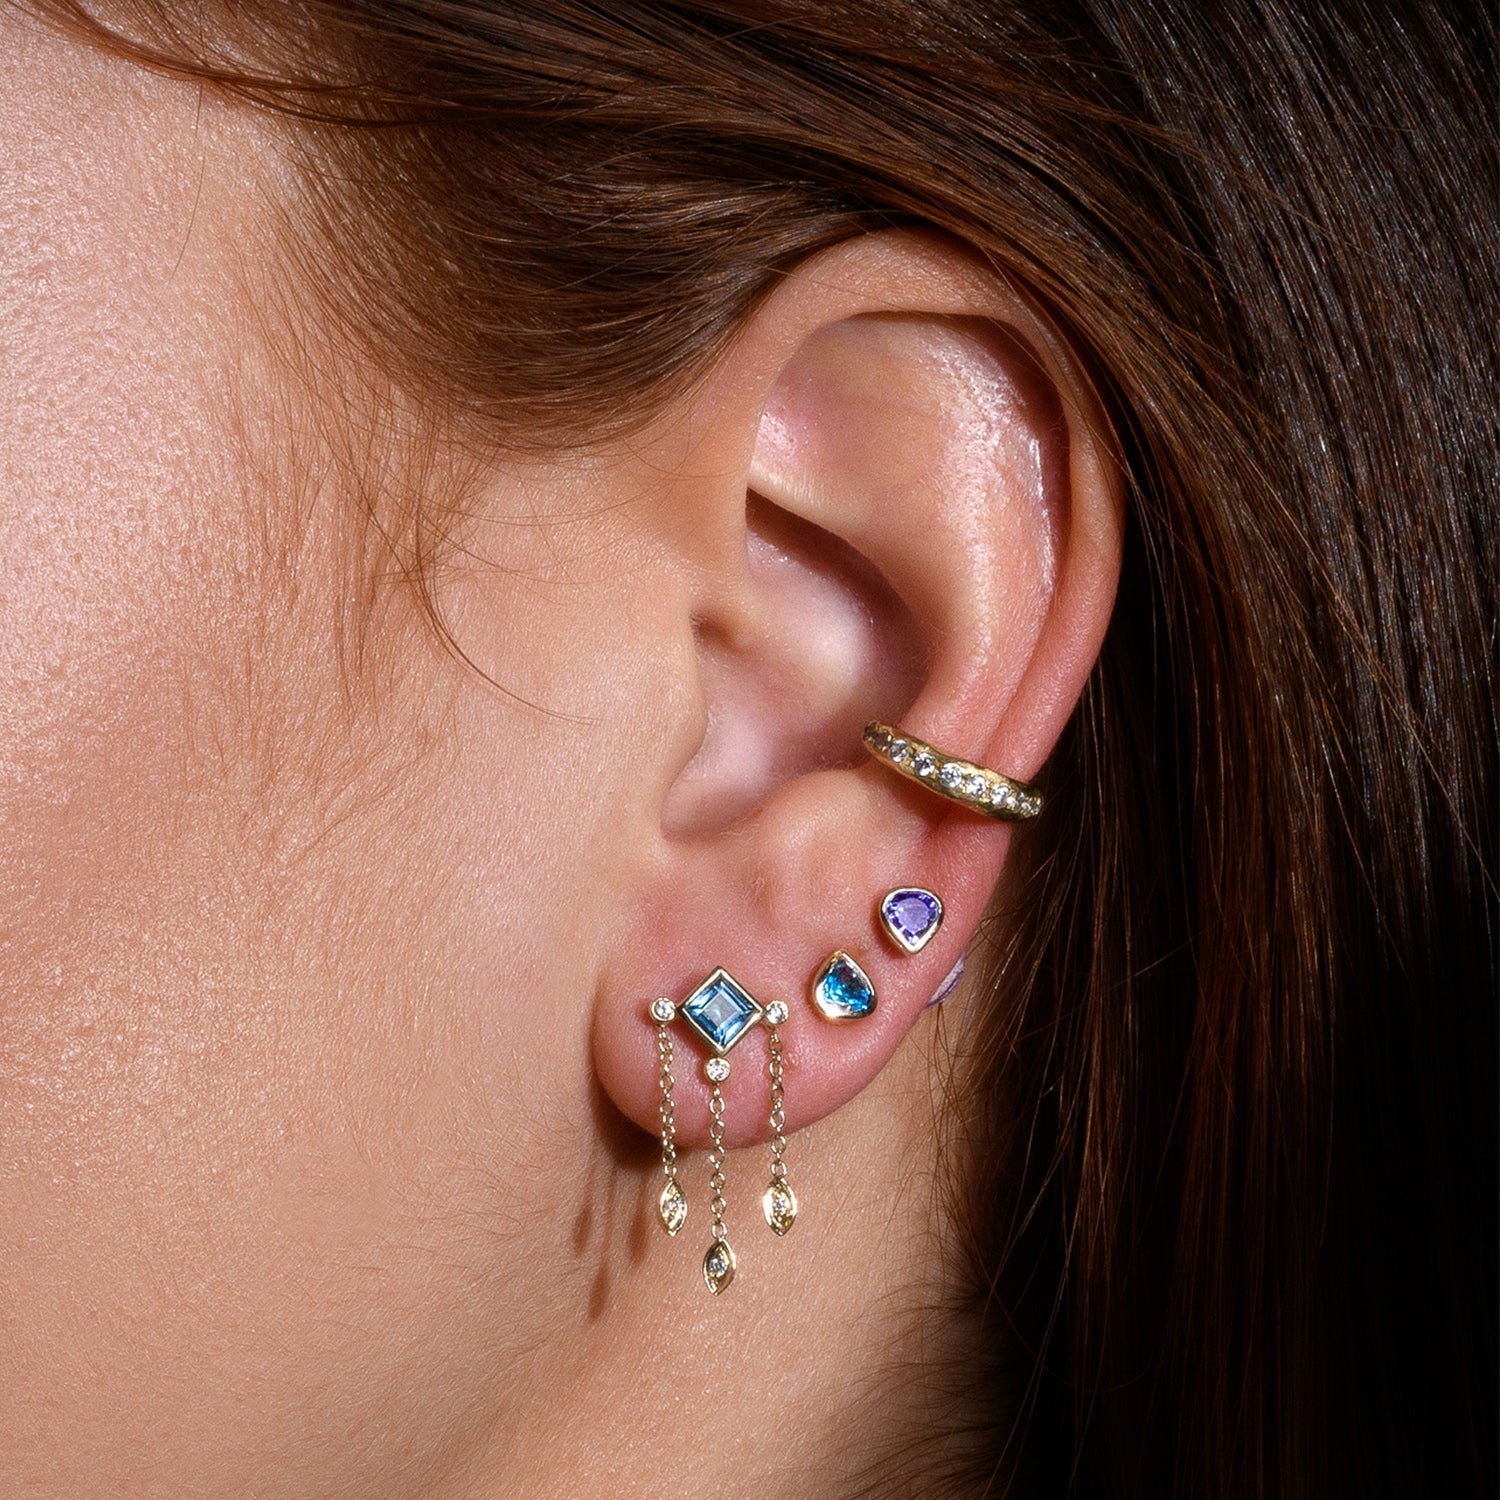 Dharamsala Earring &amp; London Topaz  - one of a kind - Danielle Gerber Freedom Jewelry